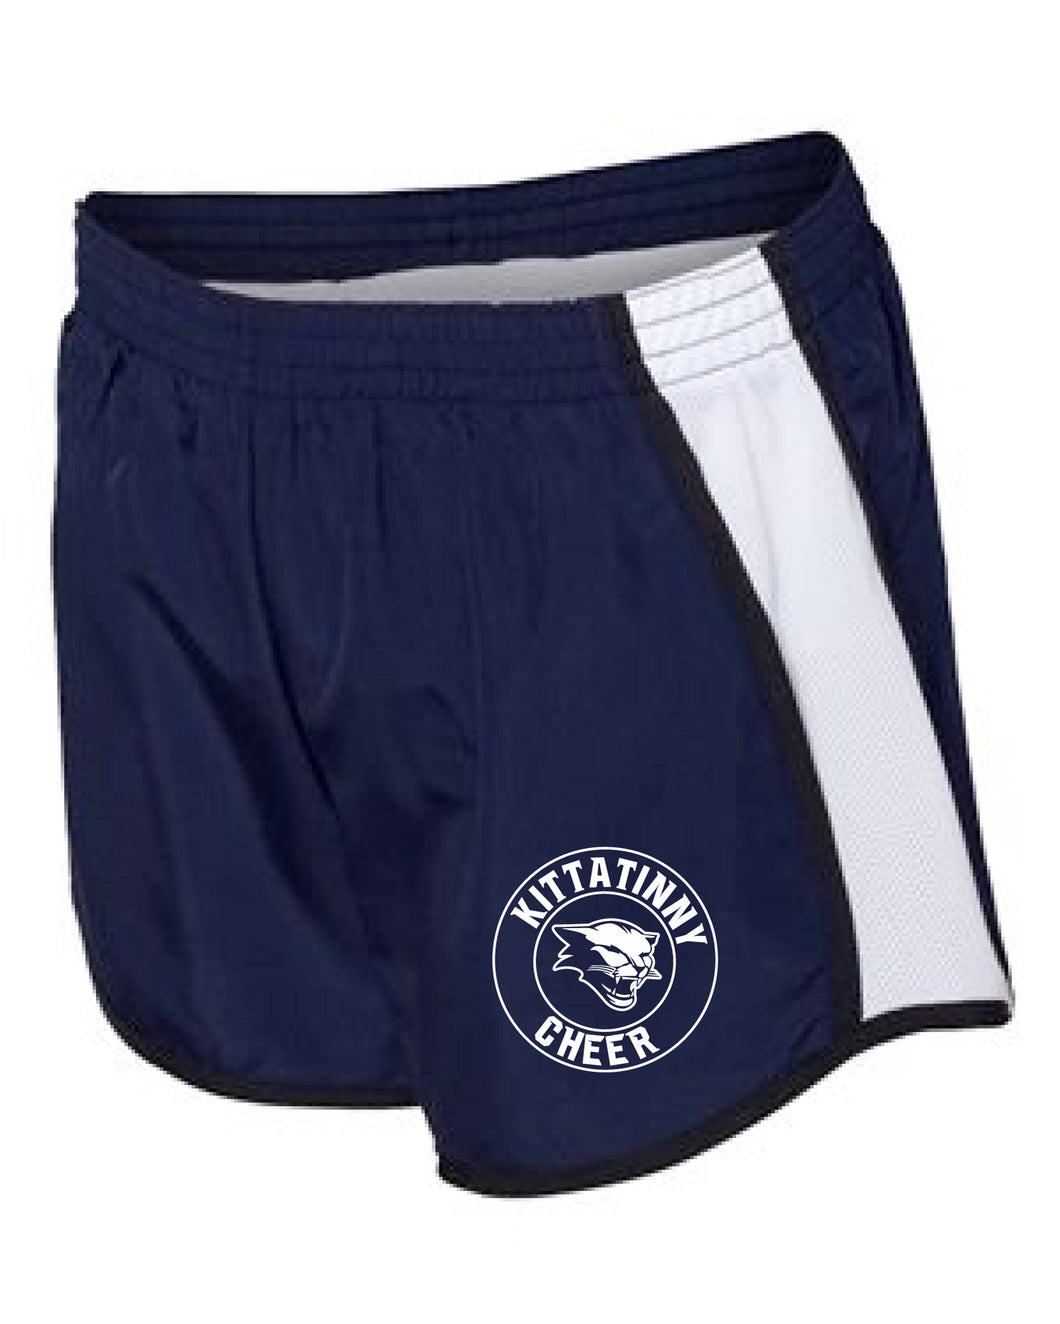 Kittatinny Cheer Athletic Shorts - Navy - 5KounT2018